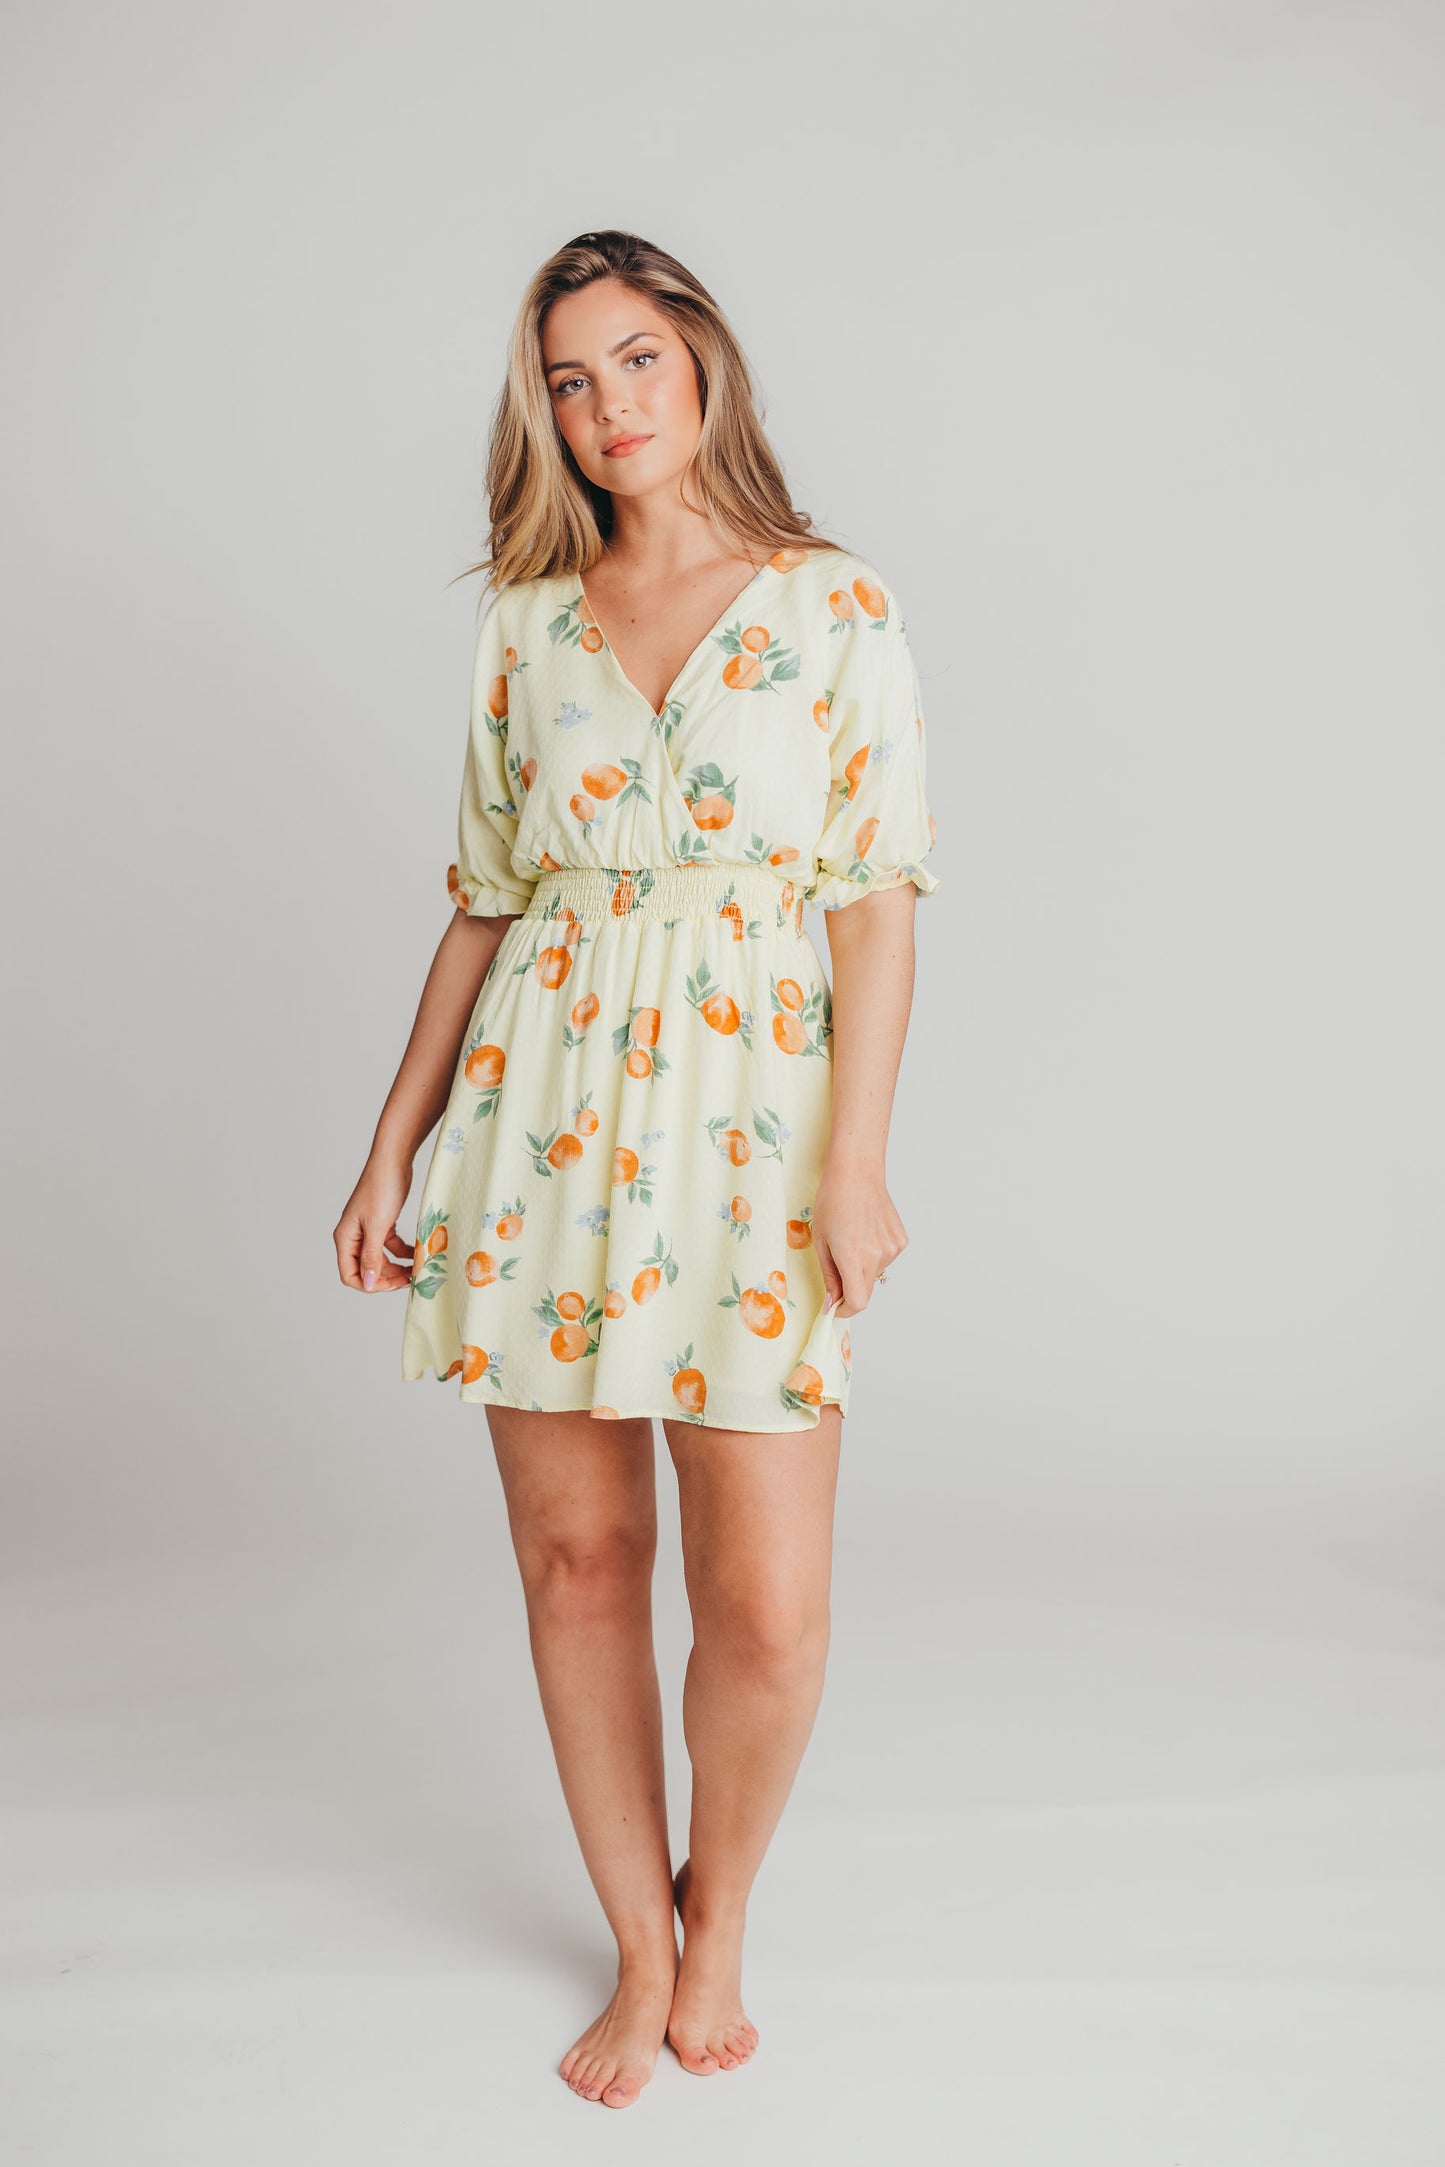 Celine Surplice Mini Dress in Lemon